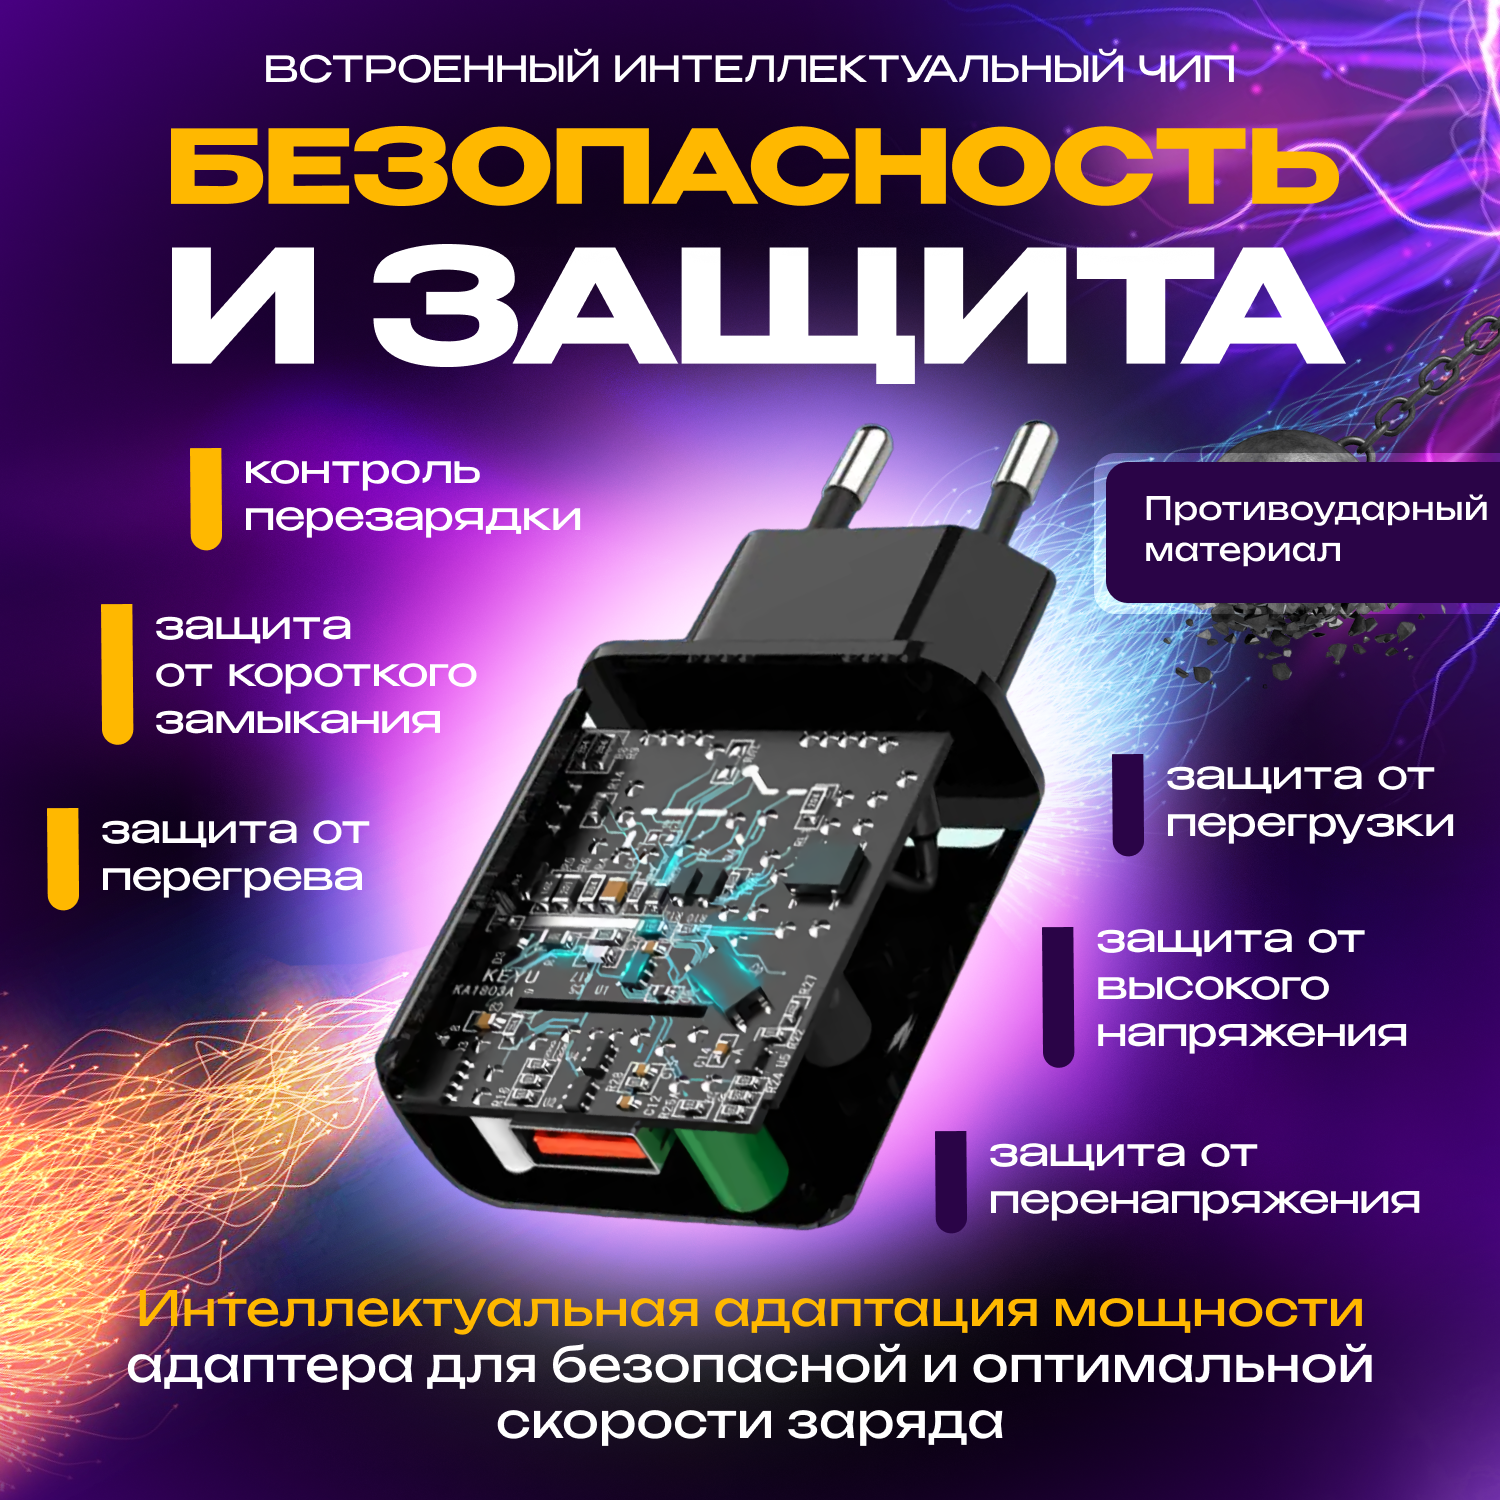 Быстрая зарядка для телефона Quick Charge 30 18W 3A с кабелем USB Type-C